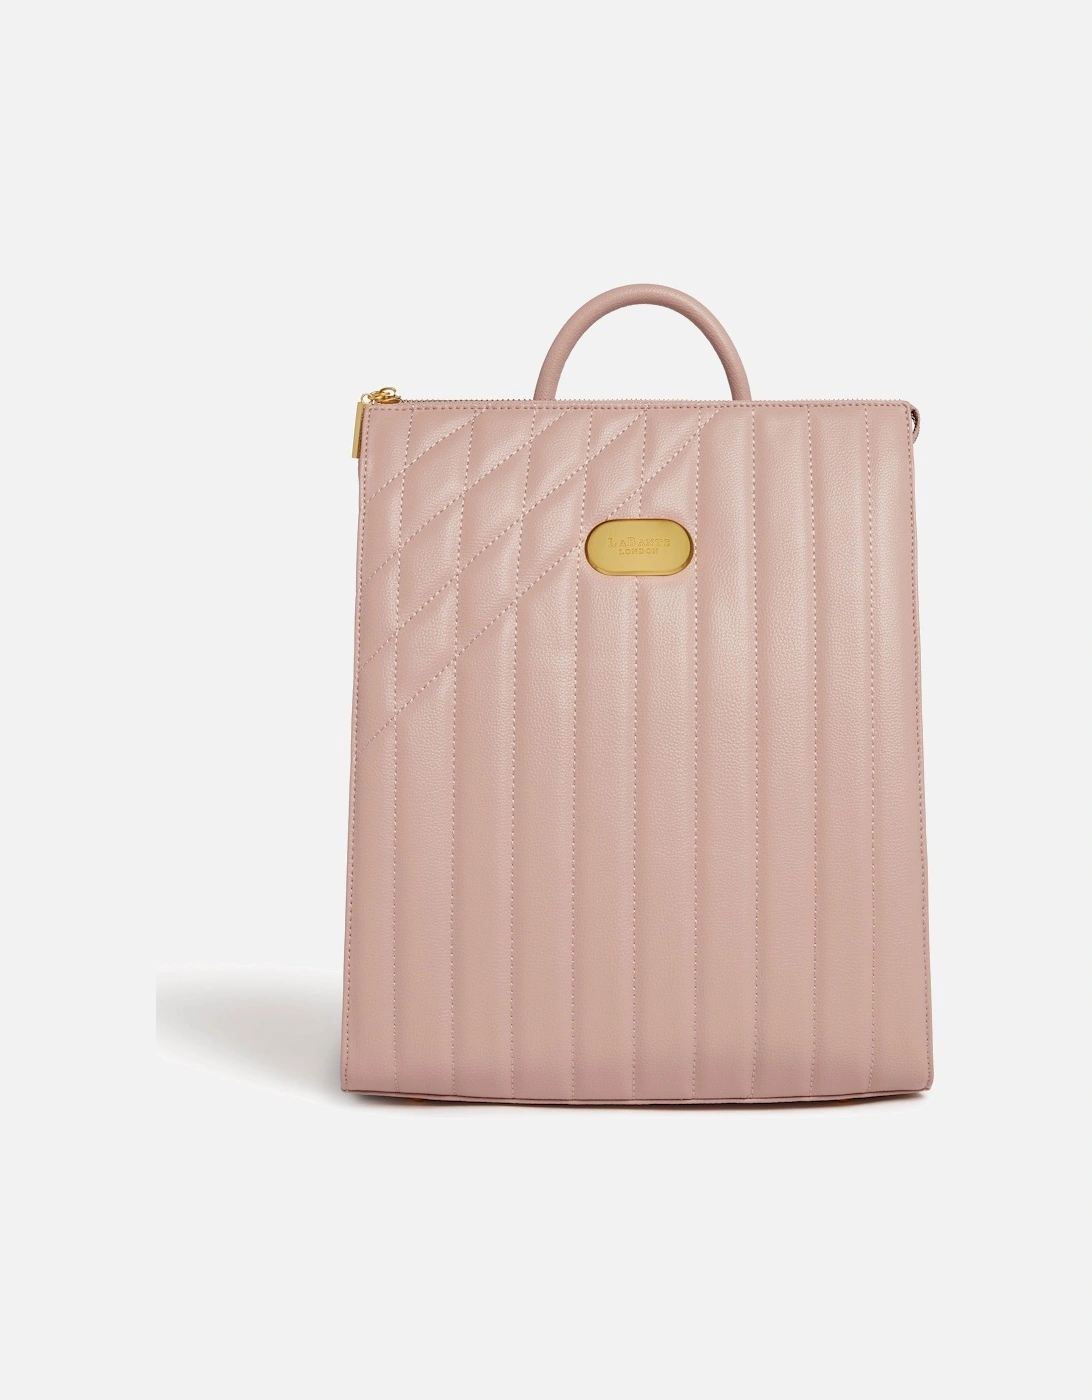 Danai Backpack in Pink